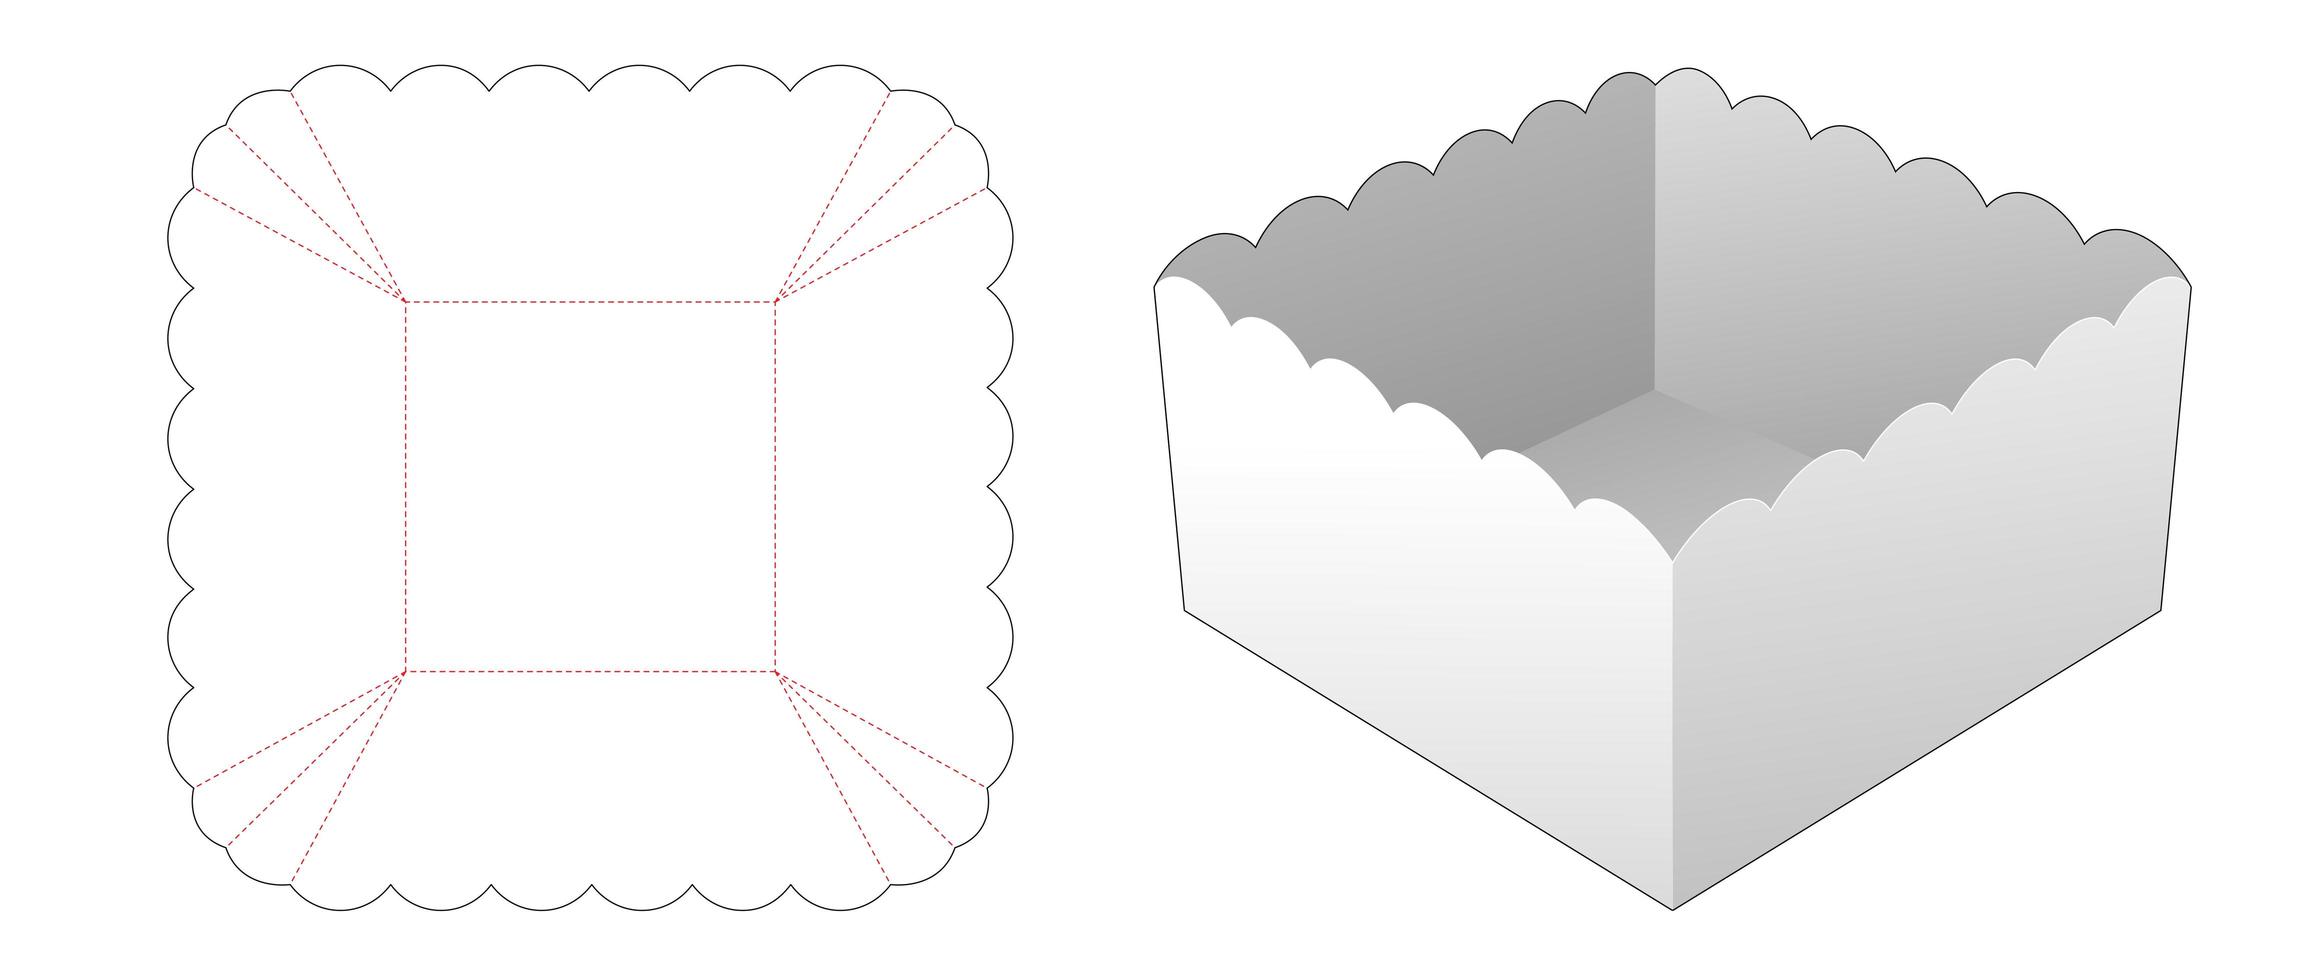 Food square bowl die cut template vector